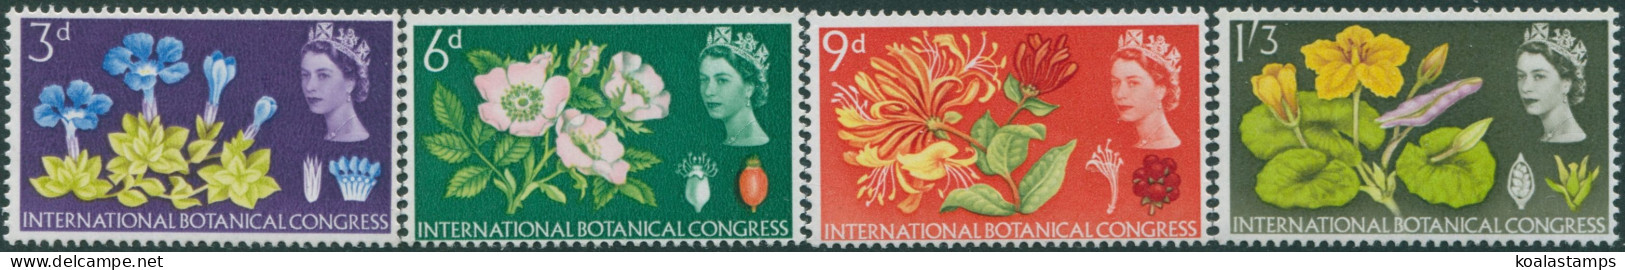 Great Britain 1964 SG655-658 QEII Botanical Congress Set MNH - Unclassified